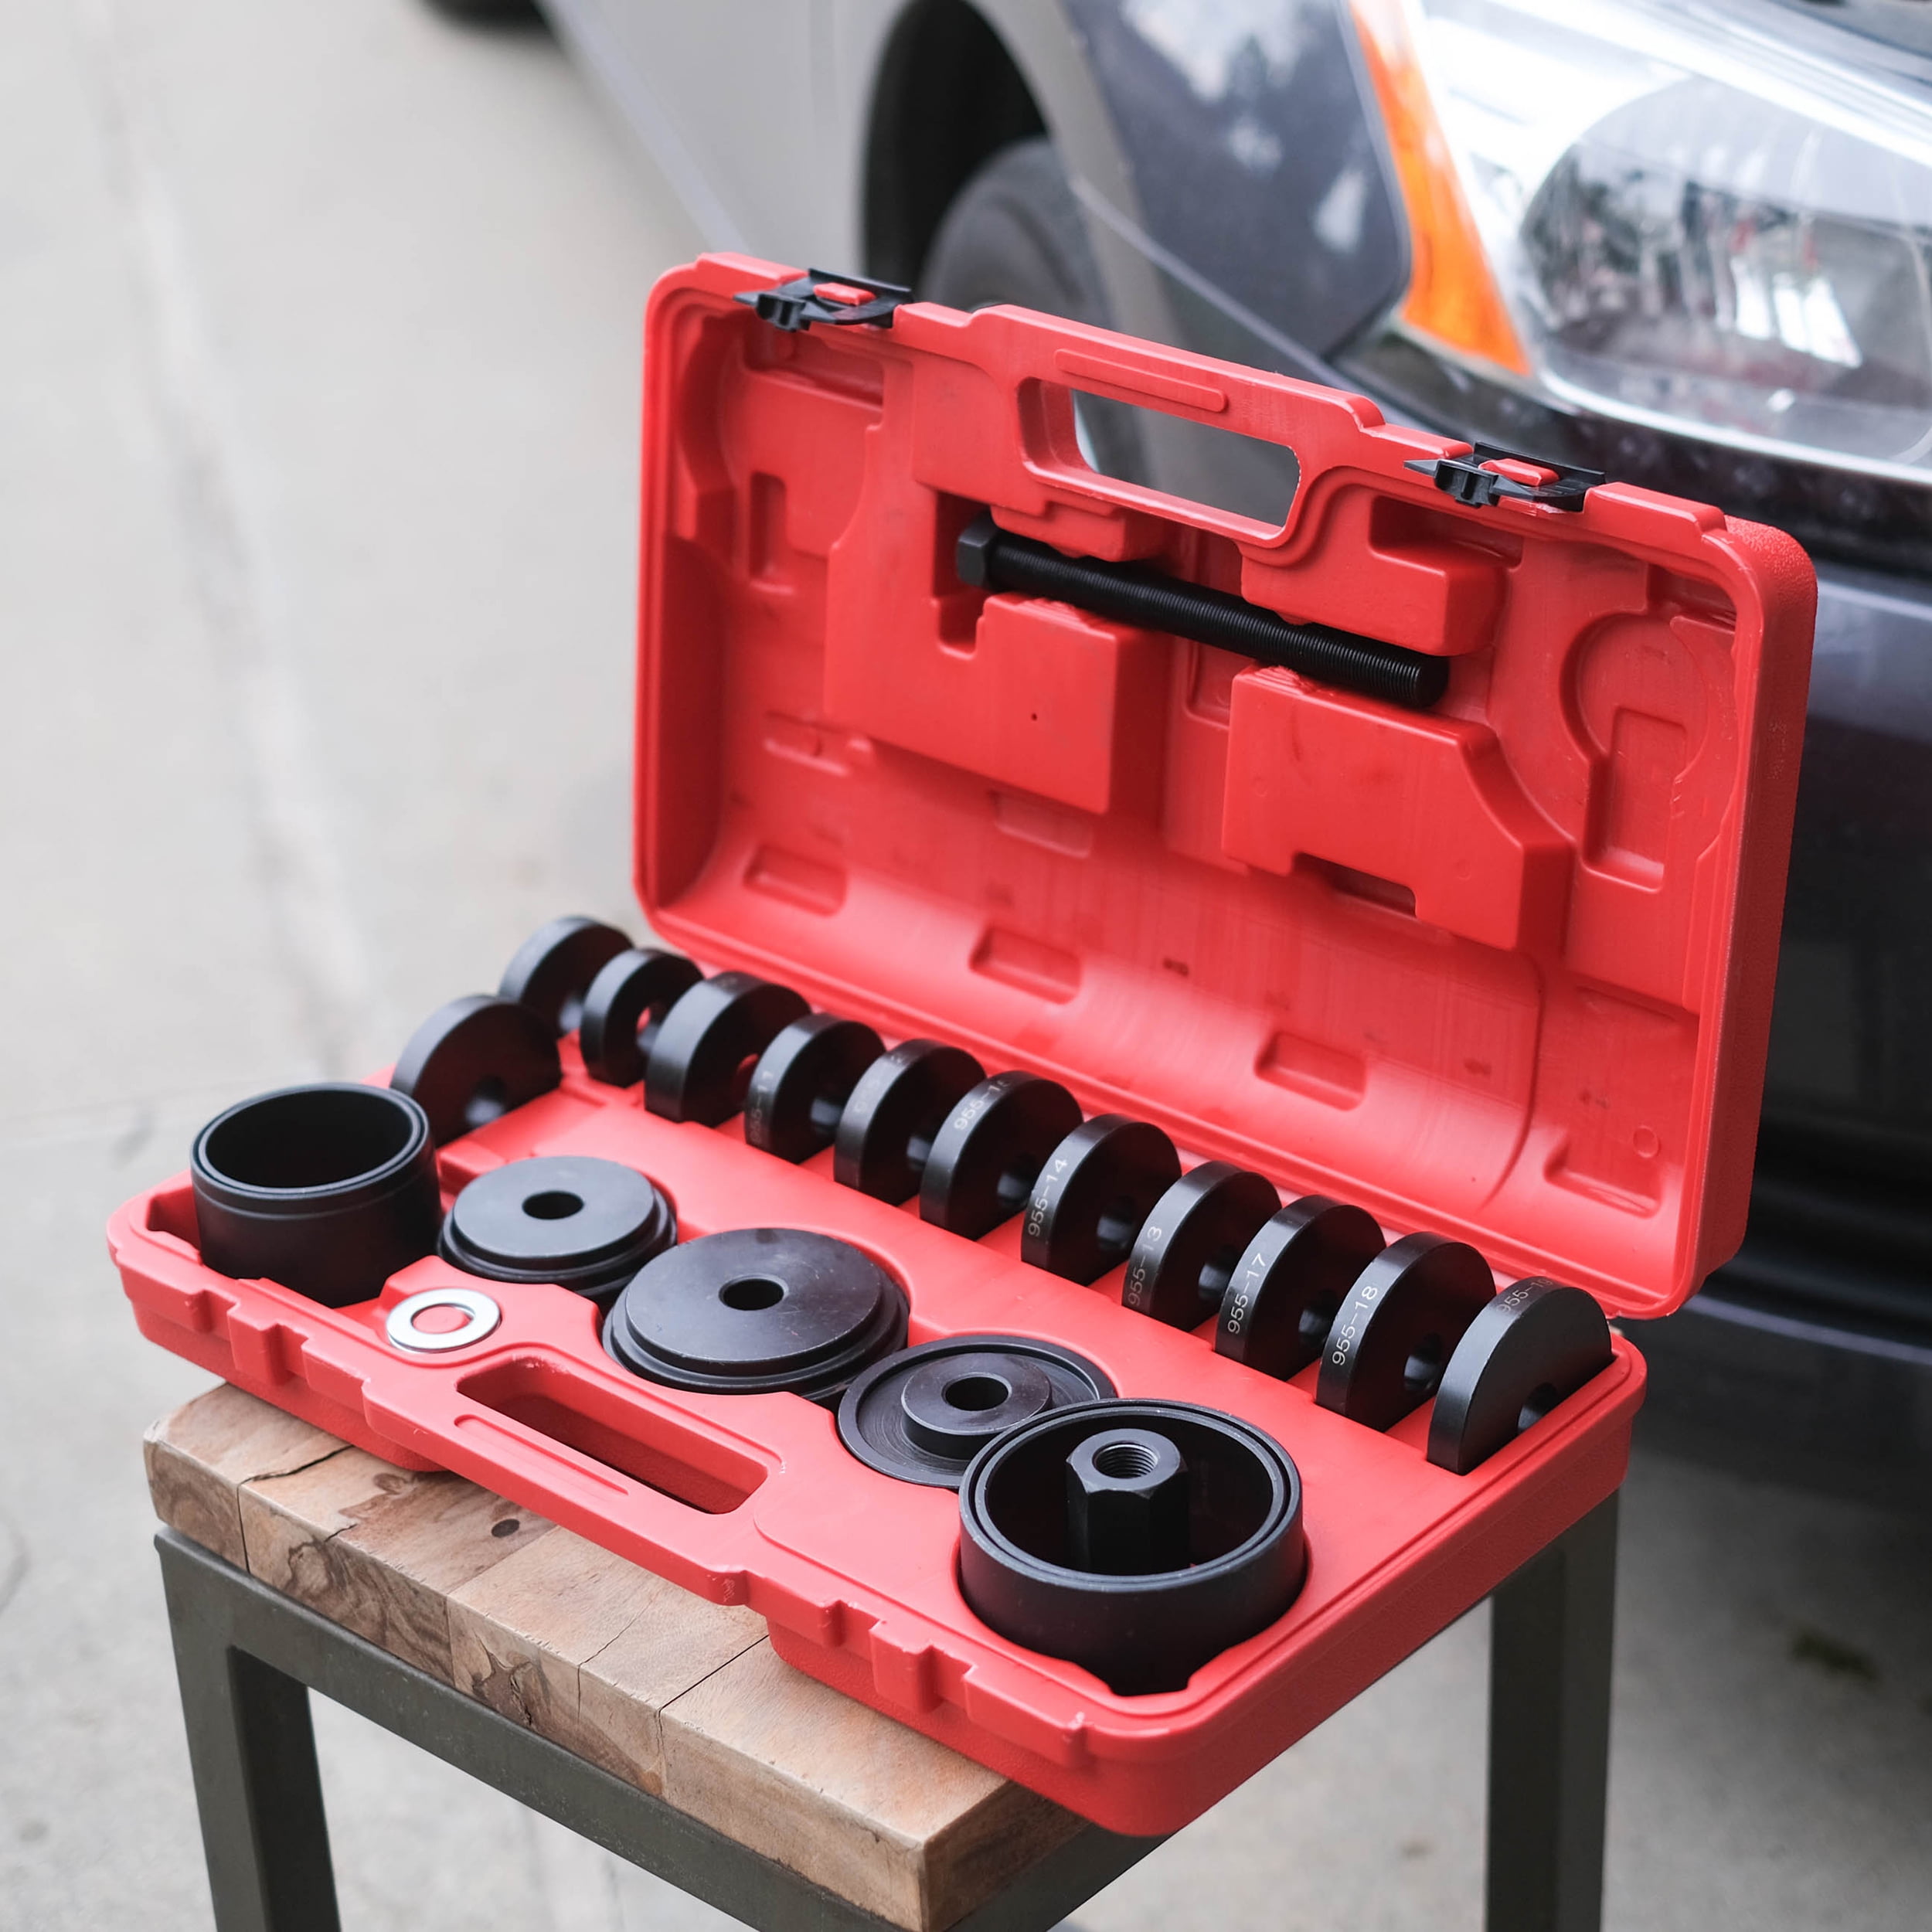 23pcs Wheel Bearing Removal Front Universal press pull Installation Tool Kit UK 